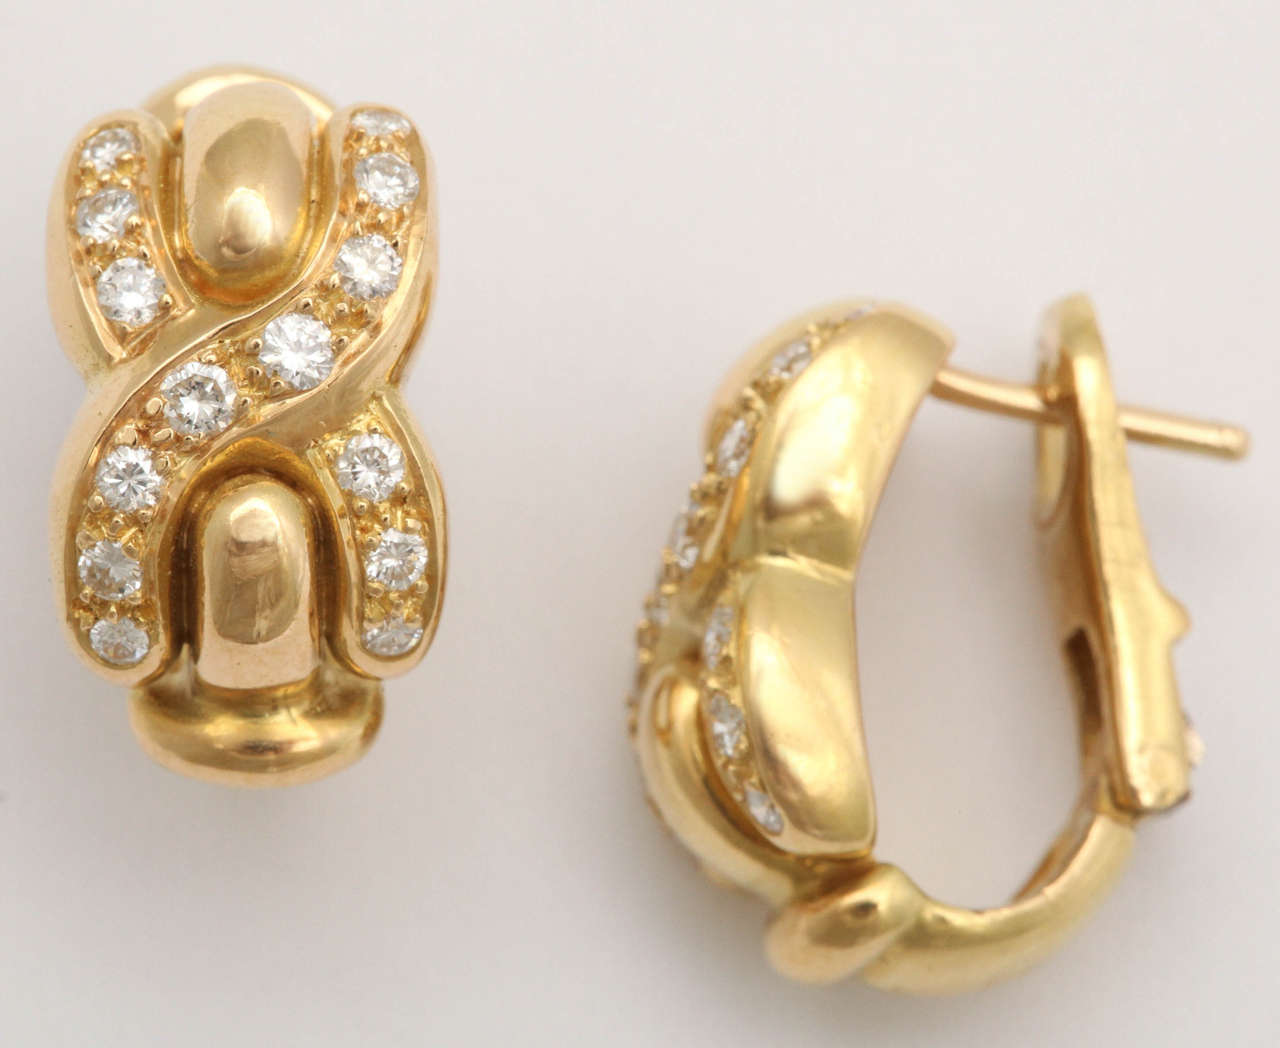 French Designer Louis Feraud Diamond 18k Gold Earrings, Paris